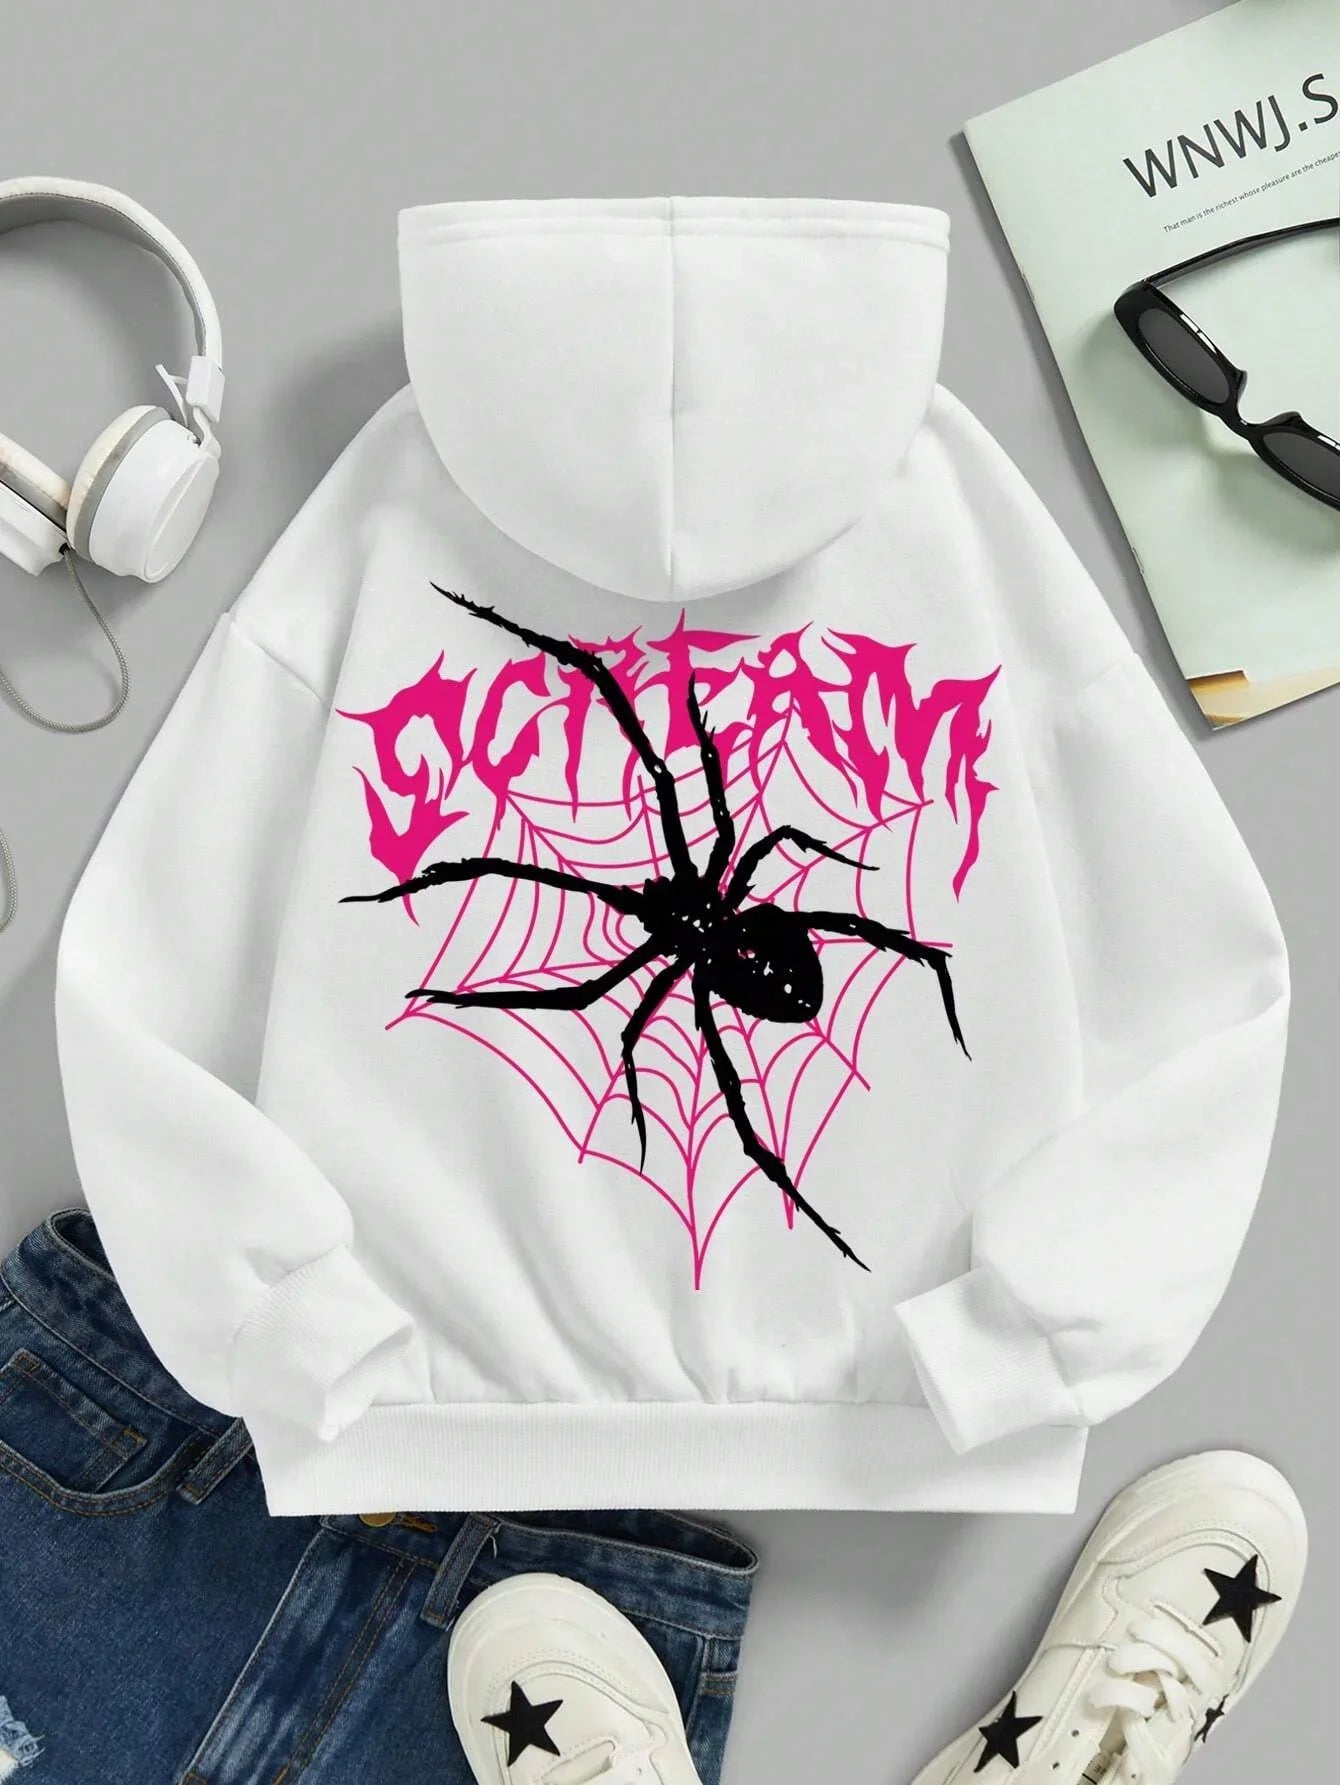 Scream Spiders & Cobwebs Printing Women Hoodies Harajuku Oversize Hoody Fashion Loose Clothing Comfortable Sweatshirt Female